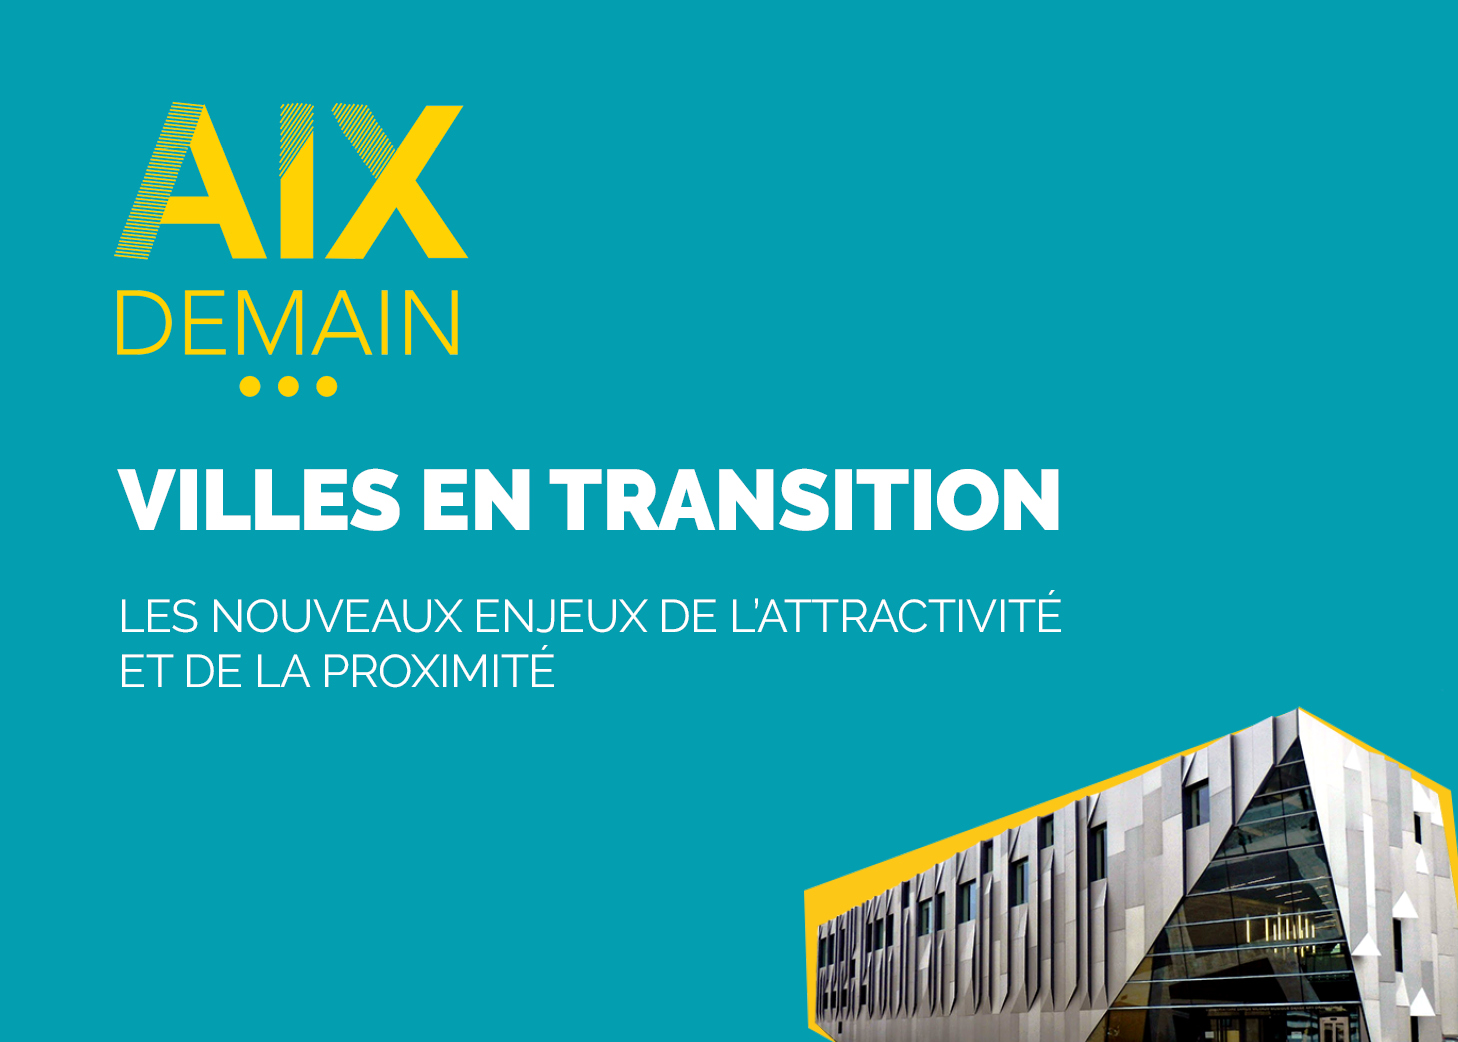 Aix Demain 2021 "Villes en transition"